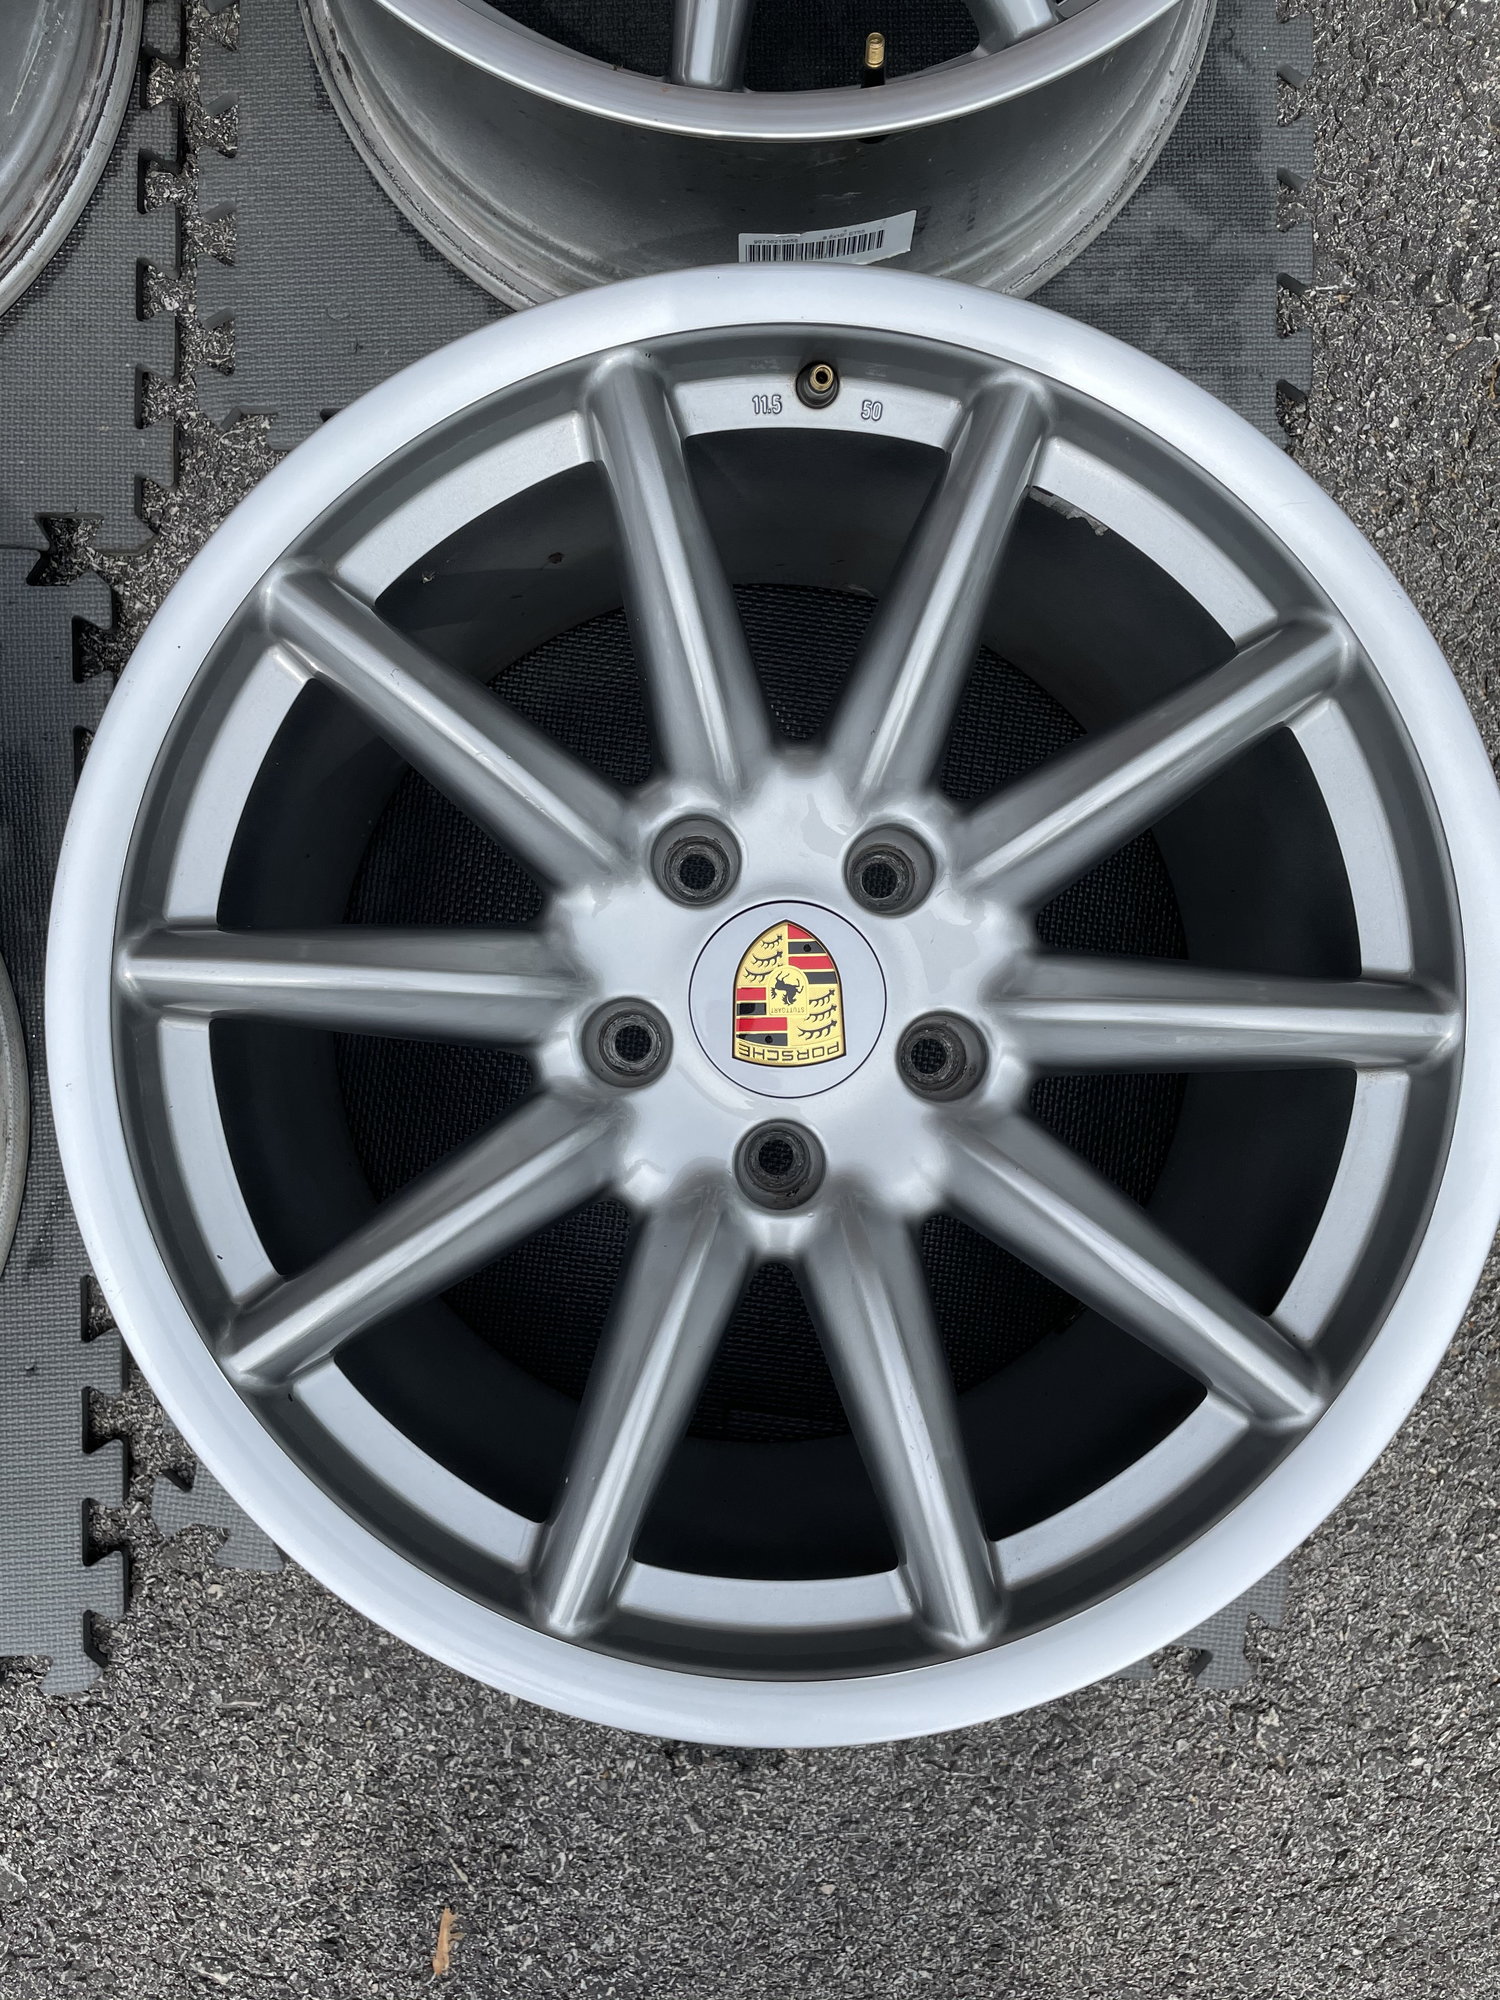 Wheels and Tires/Axles - Porsche 19 inch 997 Carrera 4S rims - Used - 2005 to 2012 Porsche 911 - Philadelphia, PA 19130, United States